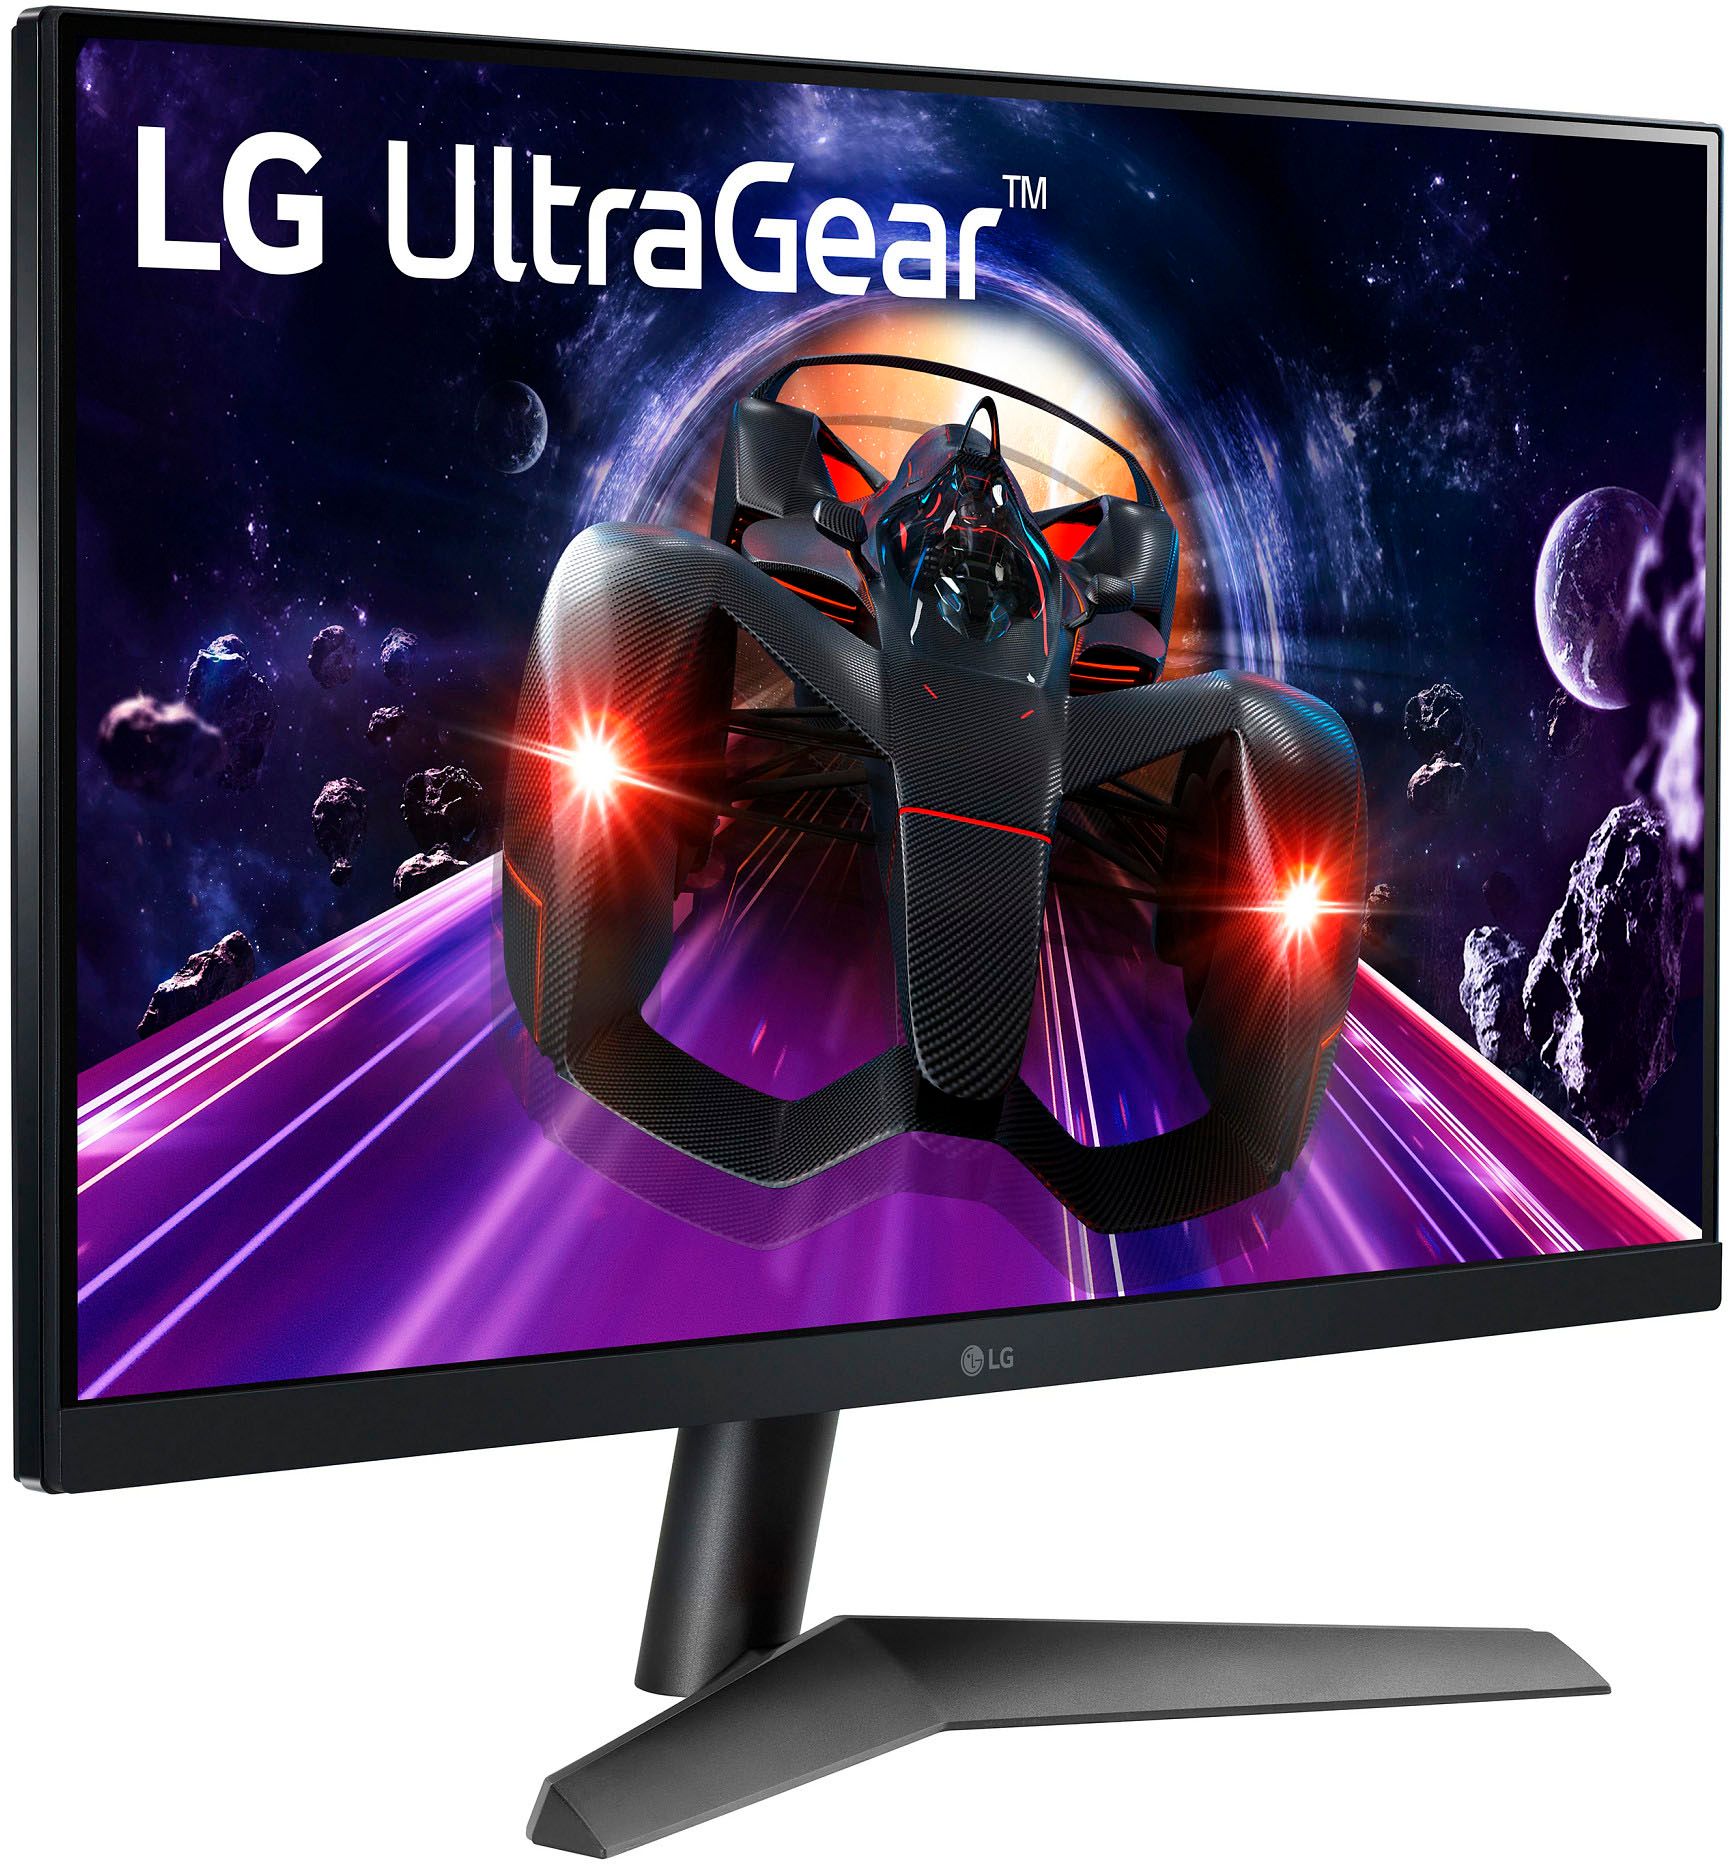 LG UltraGear 24 IPS LED FHD FreeSync Monitor with HDR (HDMI, DisplayPort)  Black 24GN60R-B - Best Buy